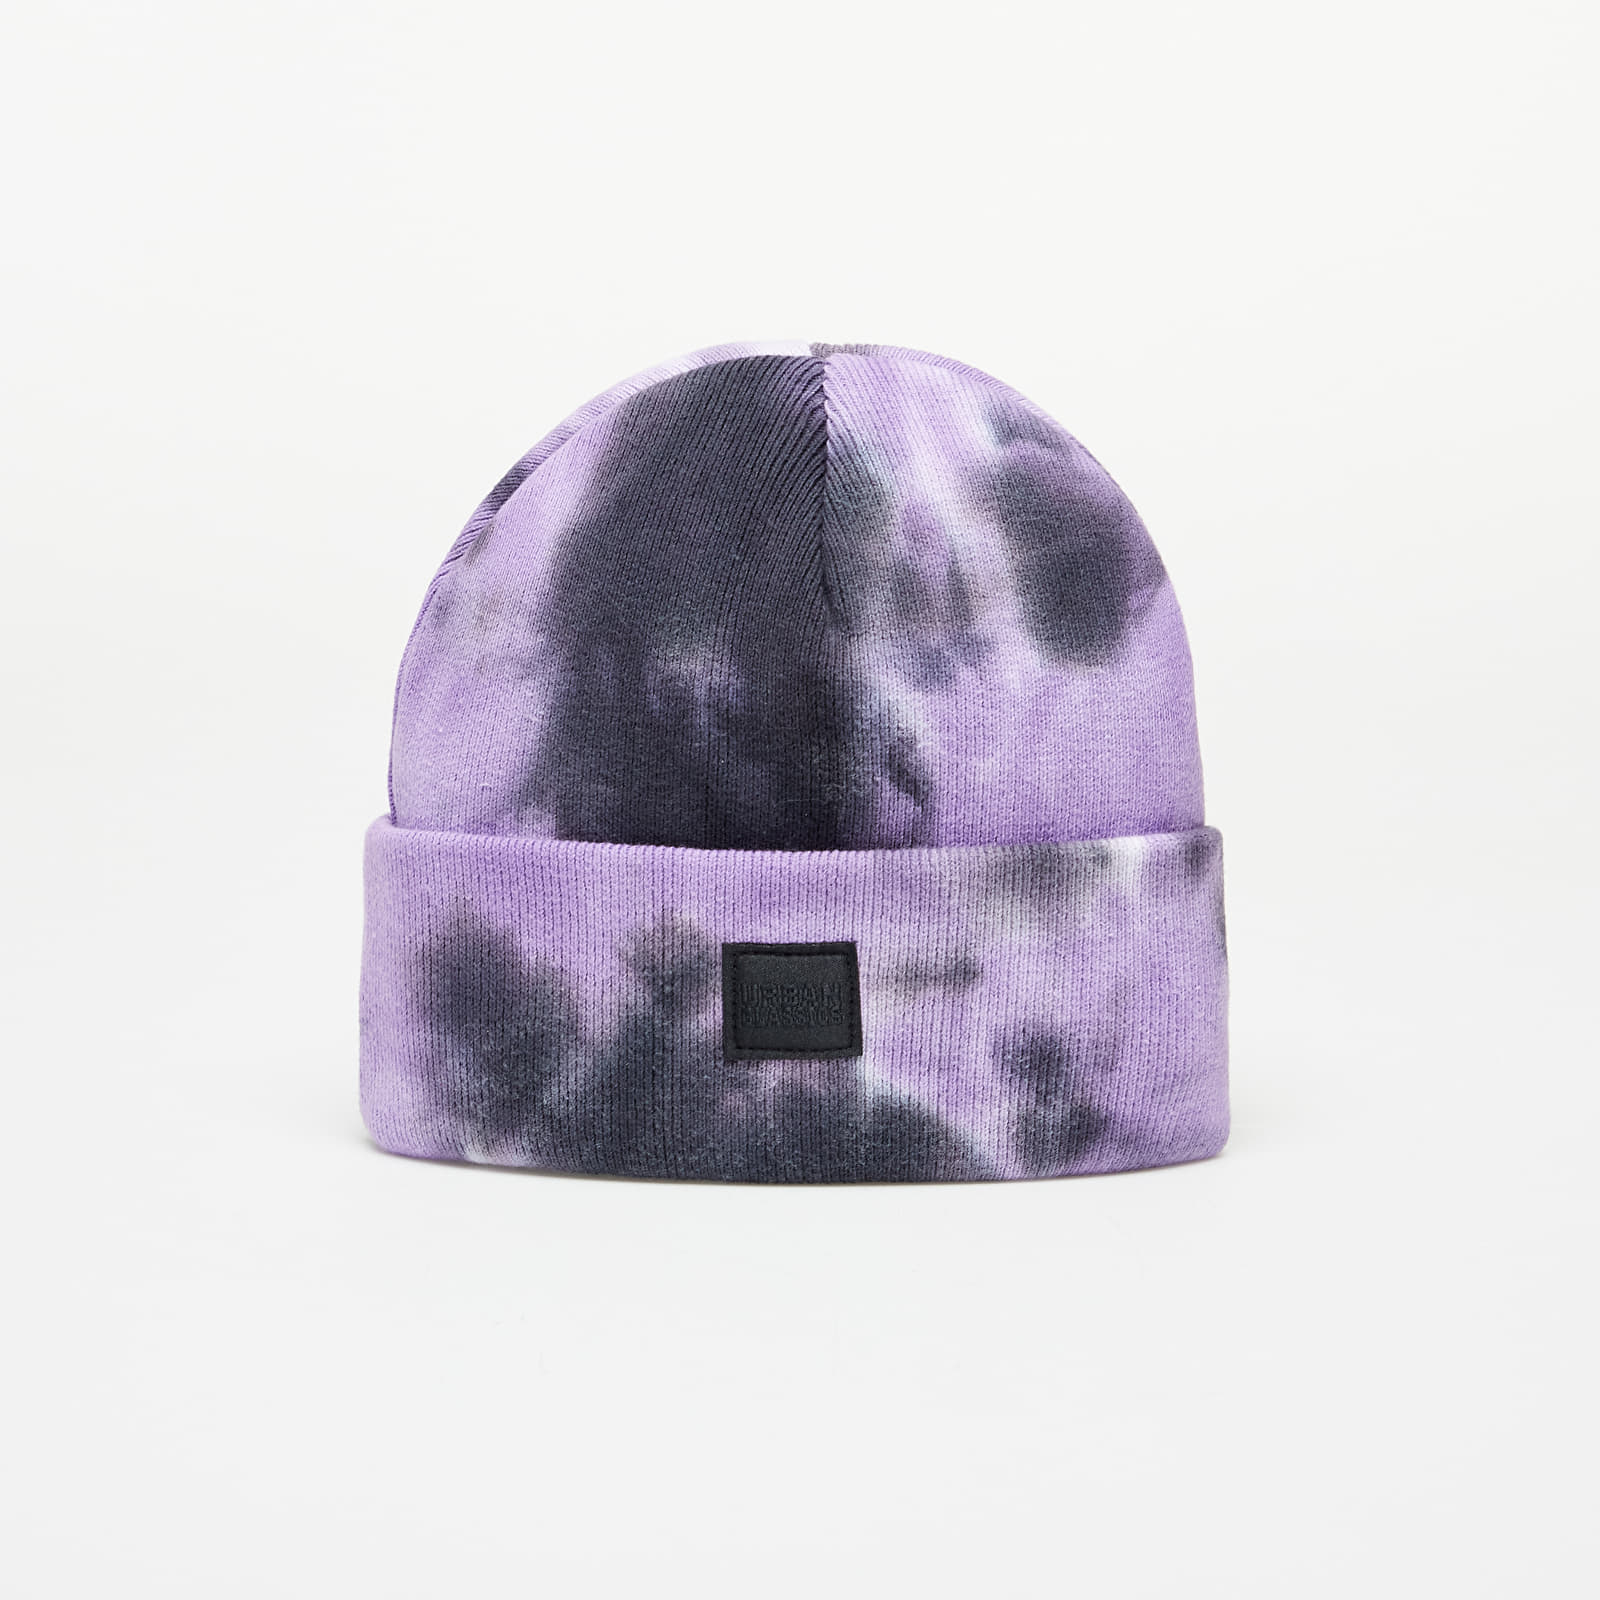 Hats Urban Tie Classics | Queens Purple/ Dye Black Beanie